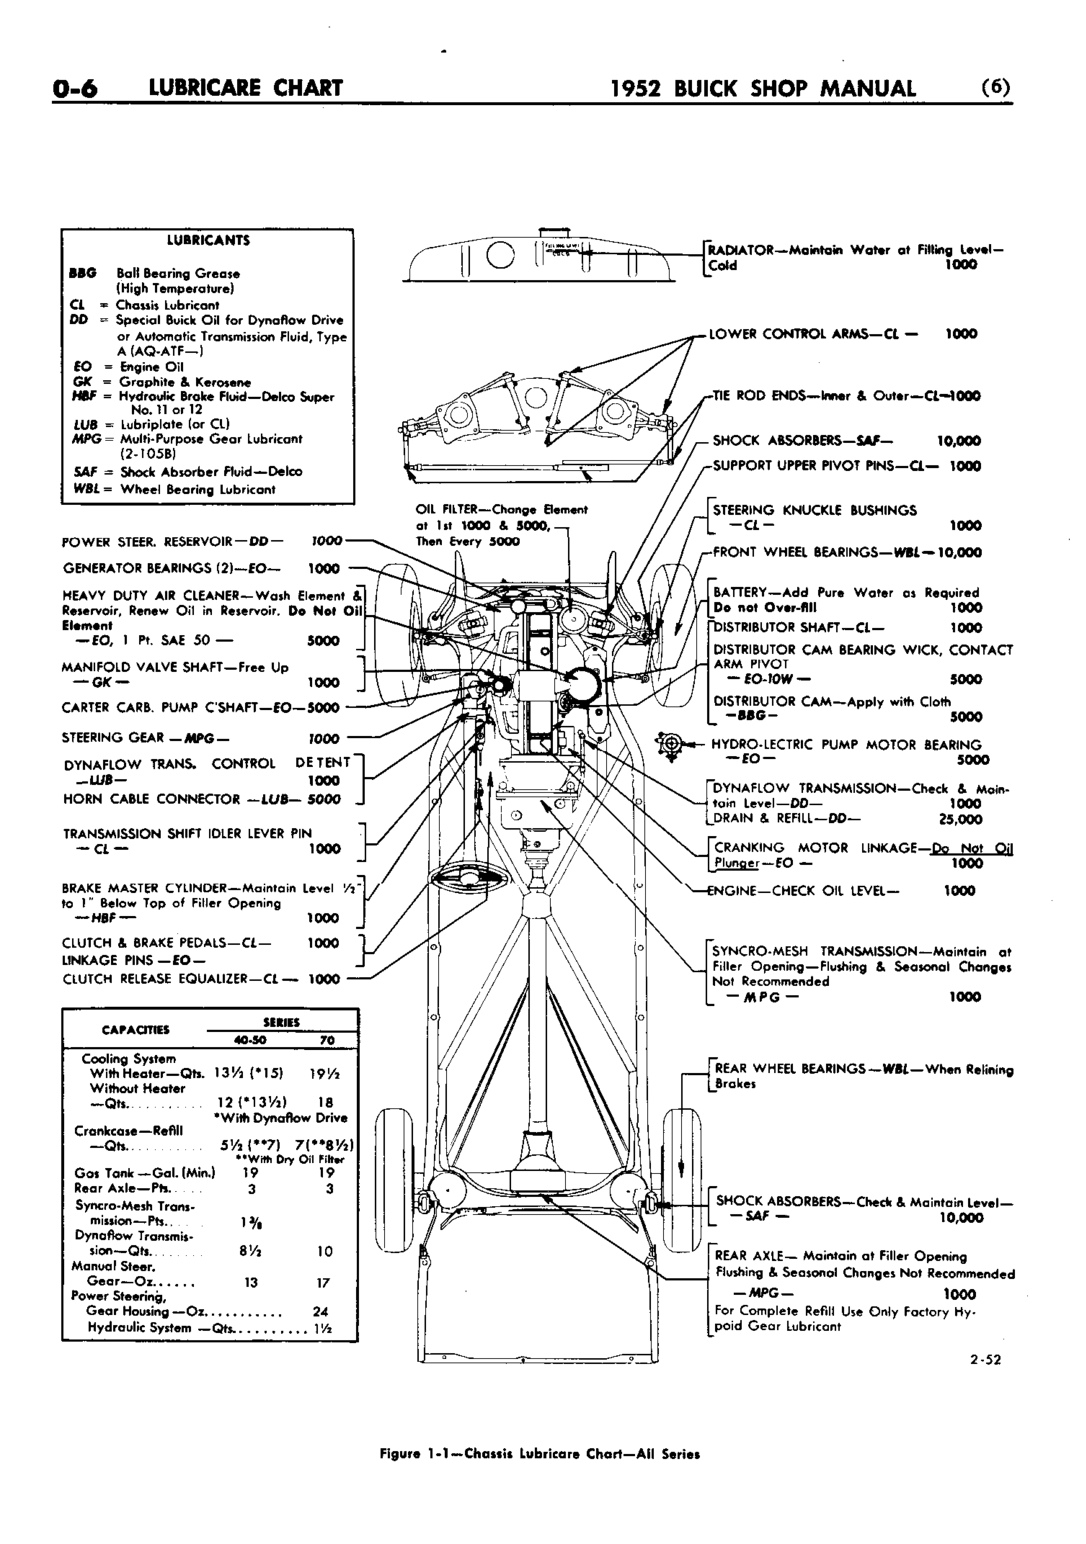 n_01 1952 Buick Shop Manual - Gen Information-007-007.jpg